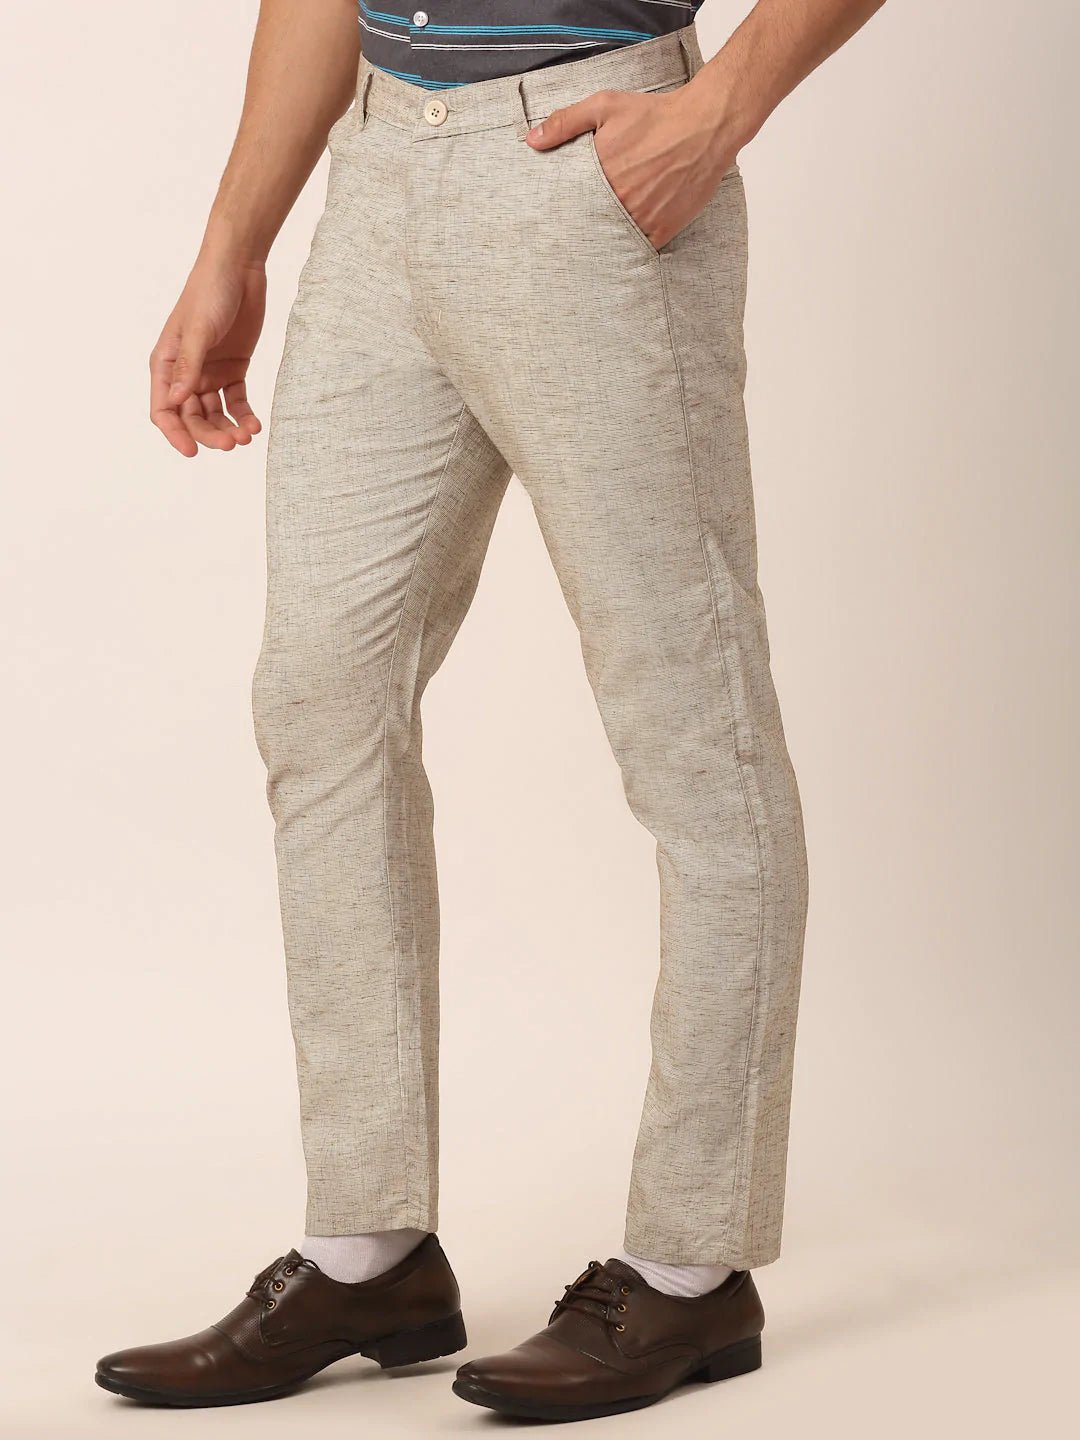 Jainish Men's Beige Linan Cotton Formal Trousers ( FGP 273 Beige )